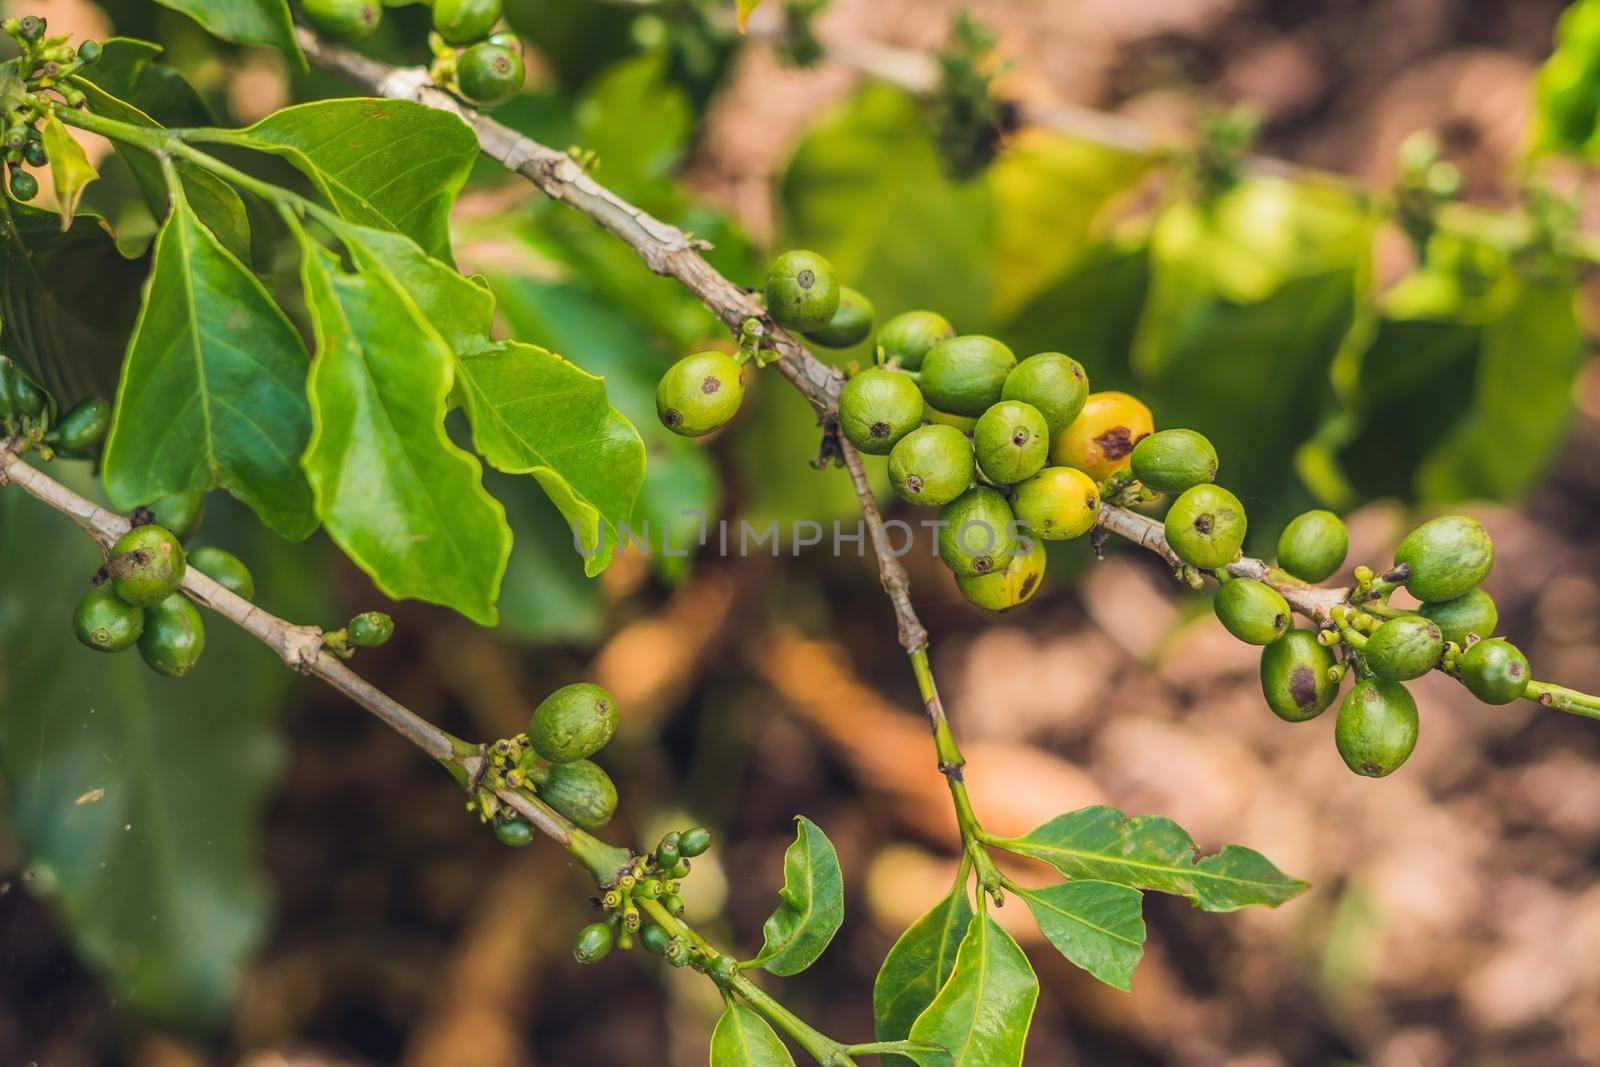 Unripe coffee beans on stem in Vietnam plantation.